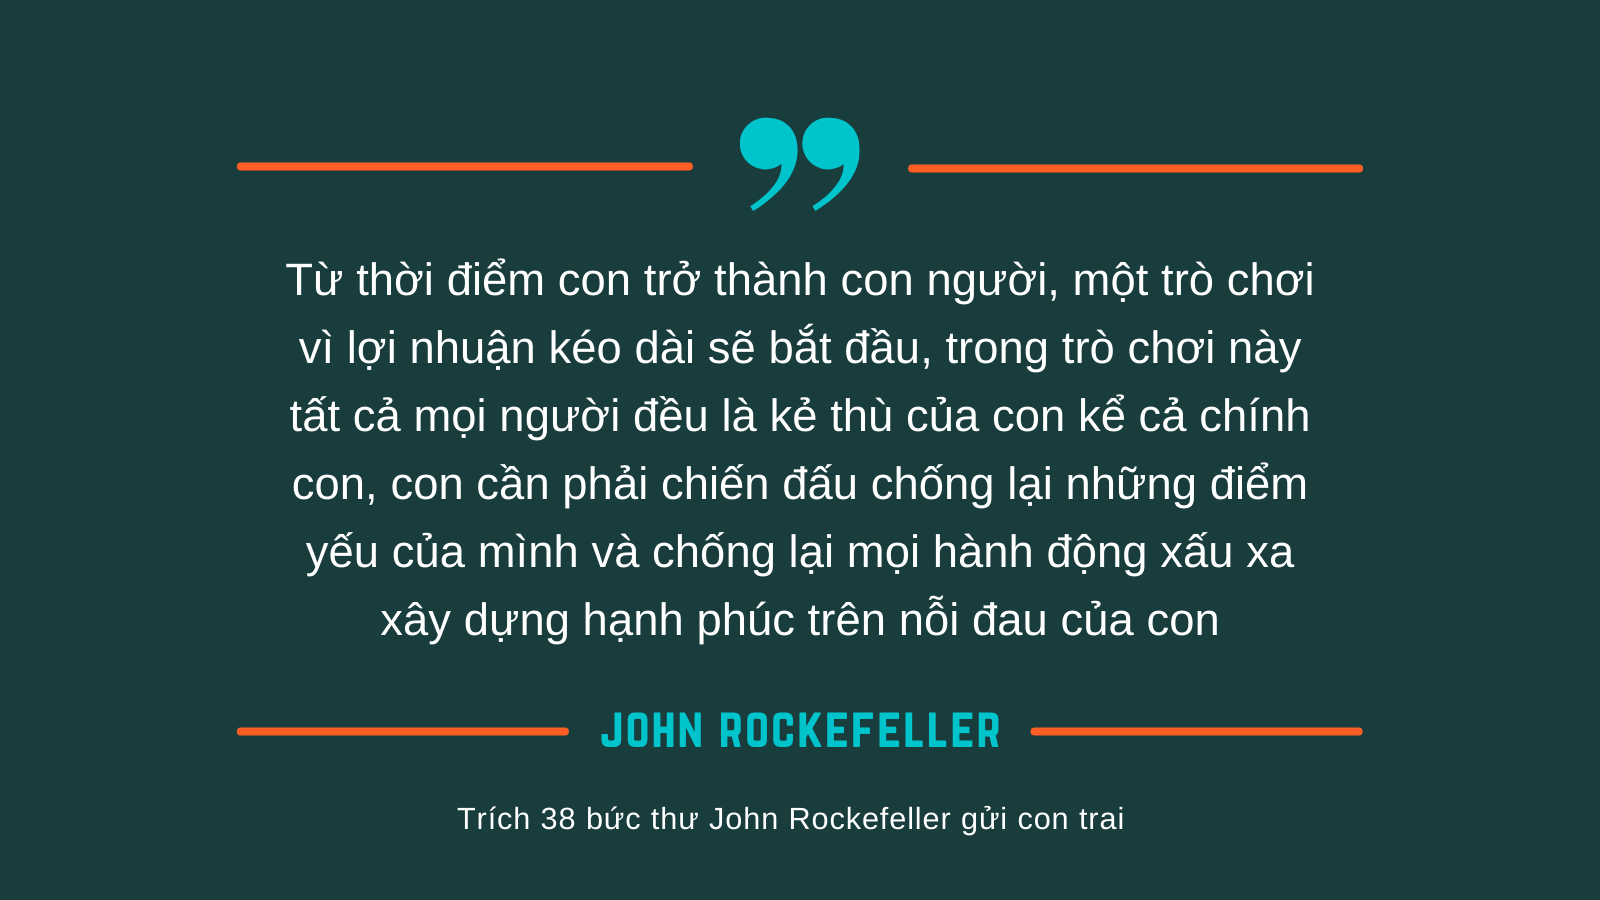 38 buc thu gui con trai cua John Rockefeller 8